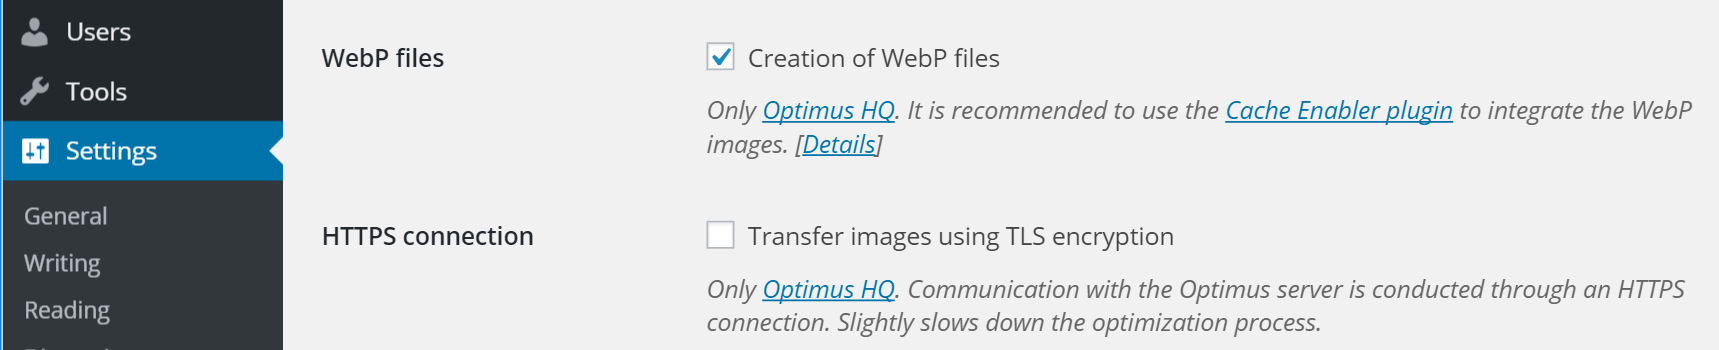 creation of webp files